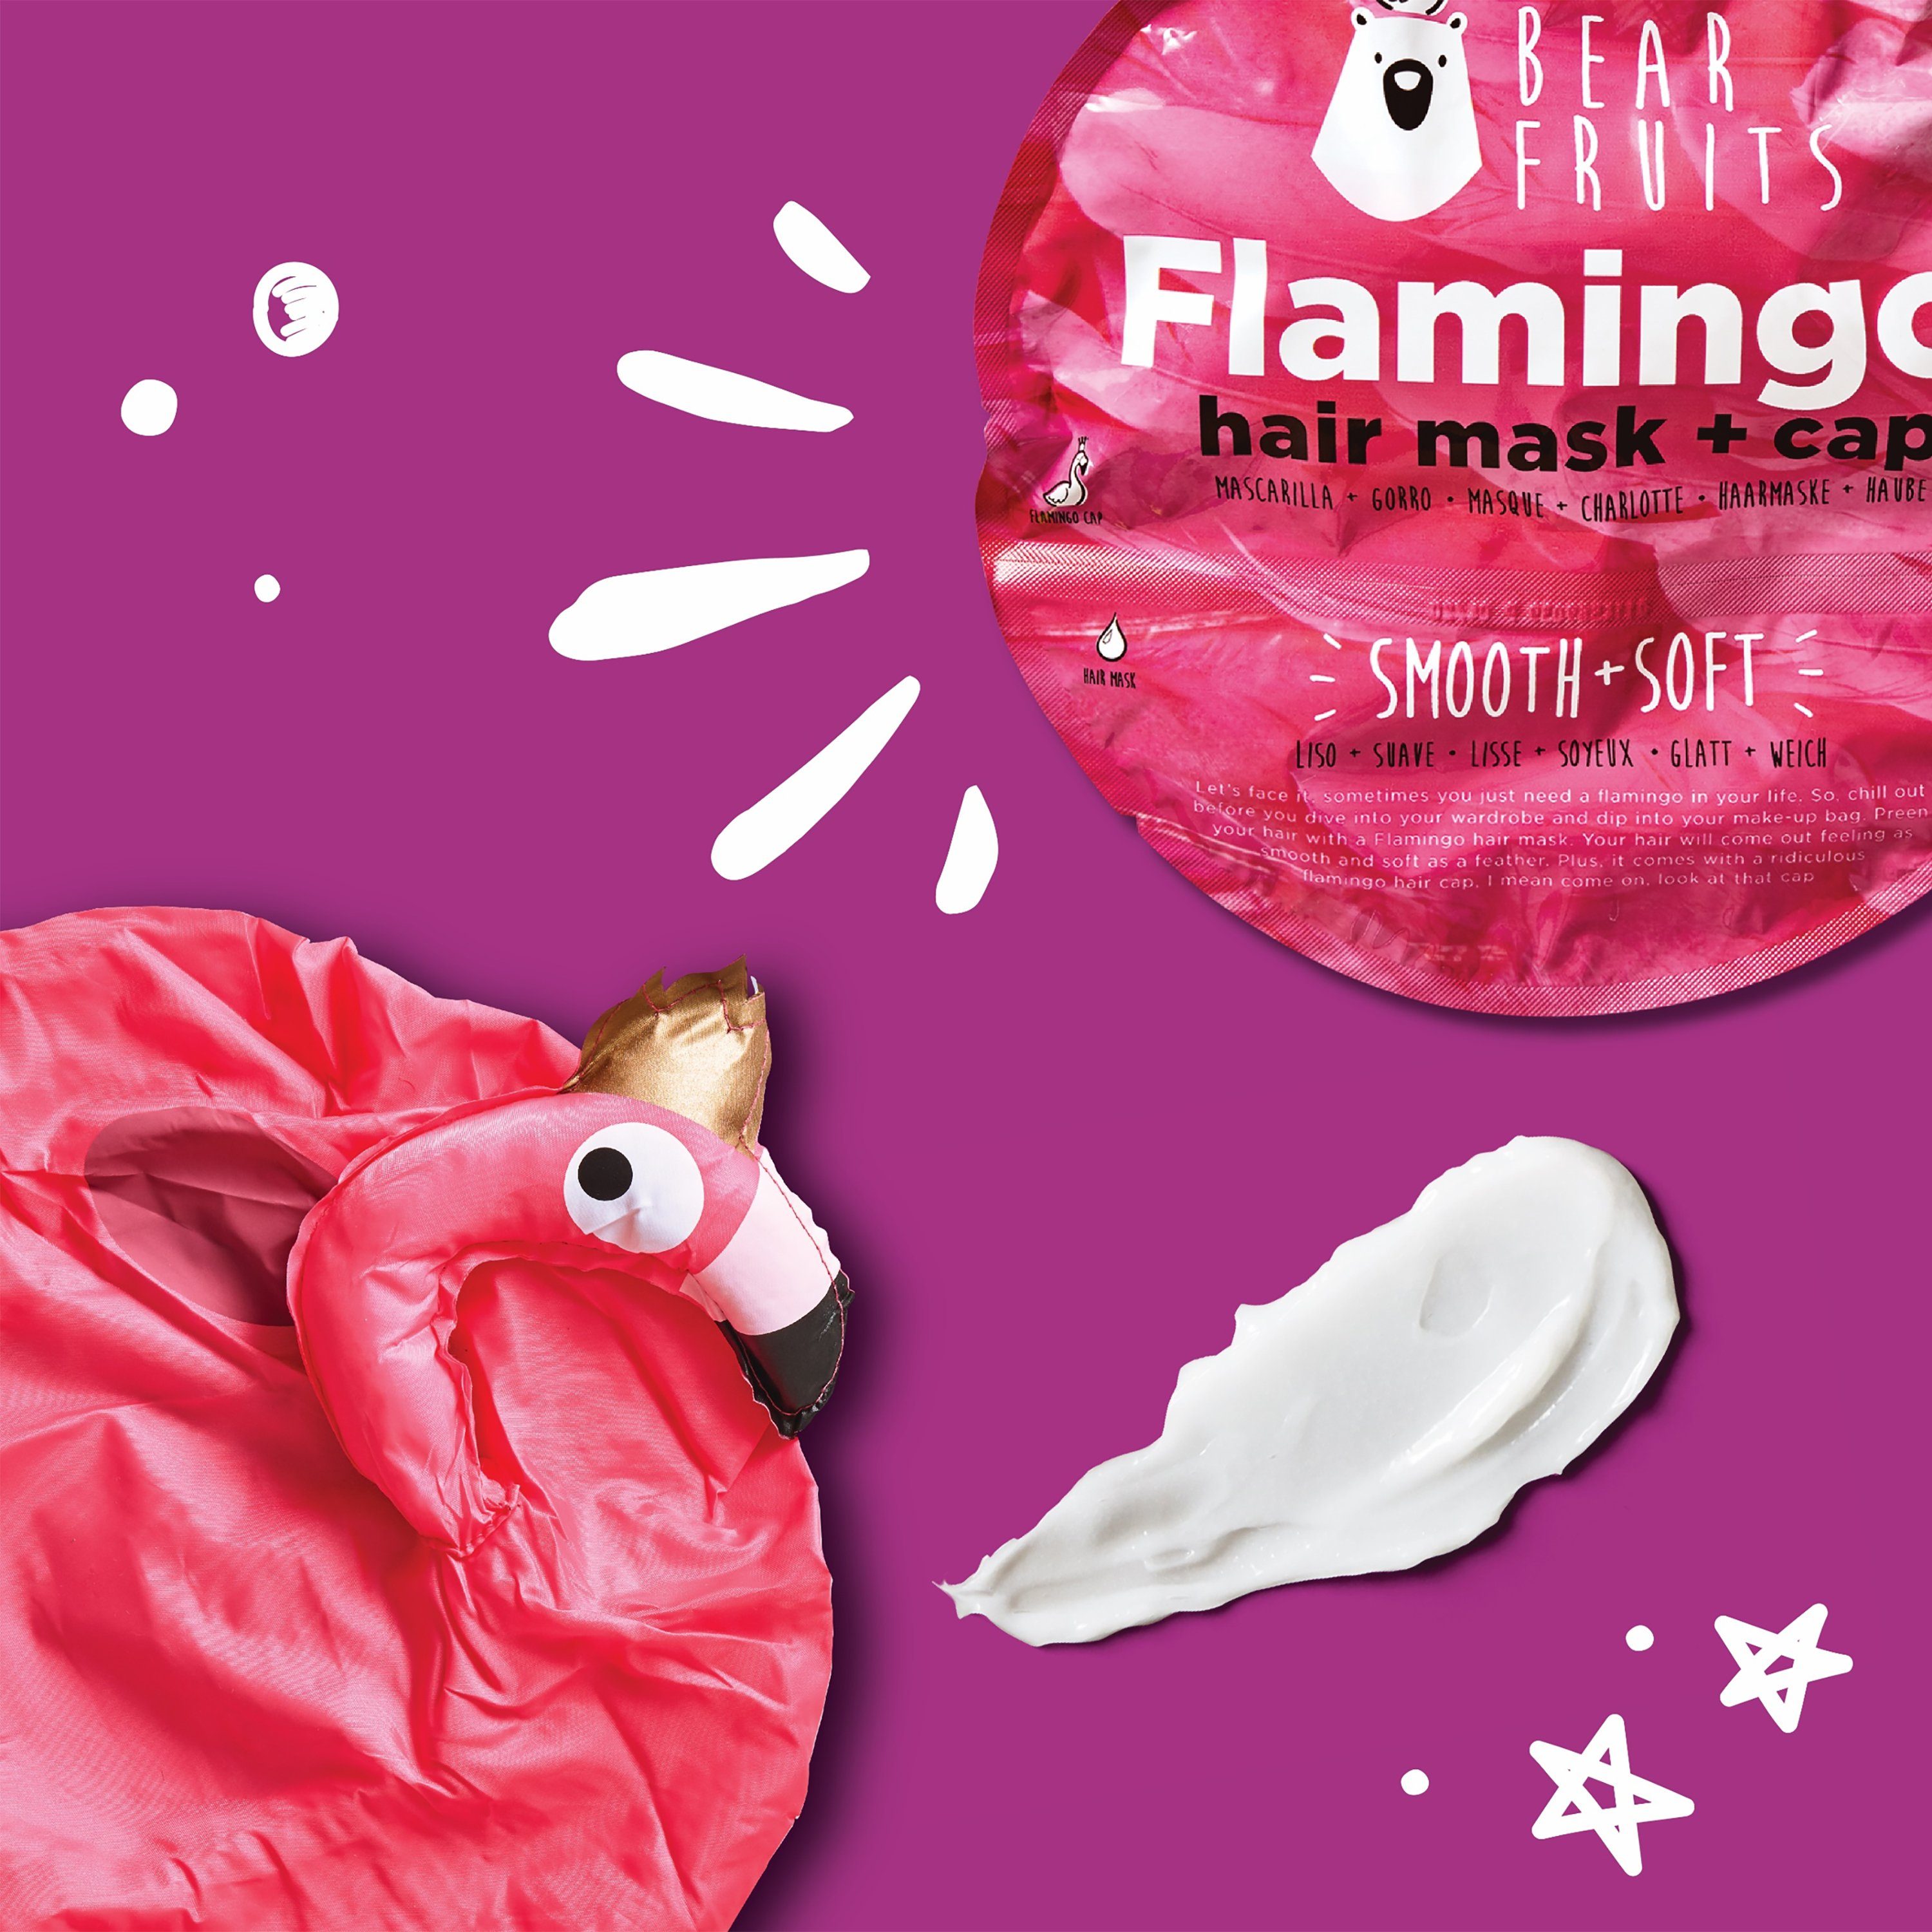 Hair Flamingo Bear Haarkur Fruits mask + cap -